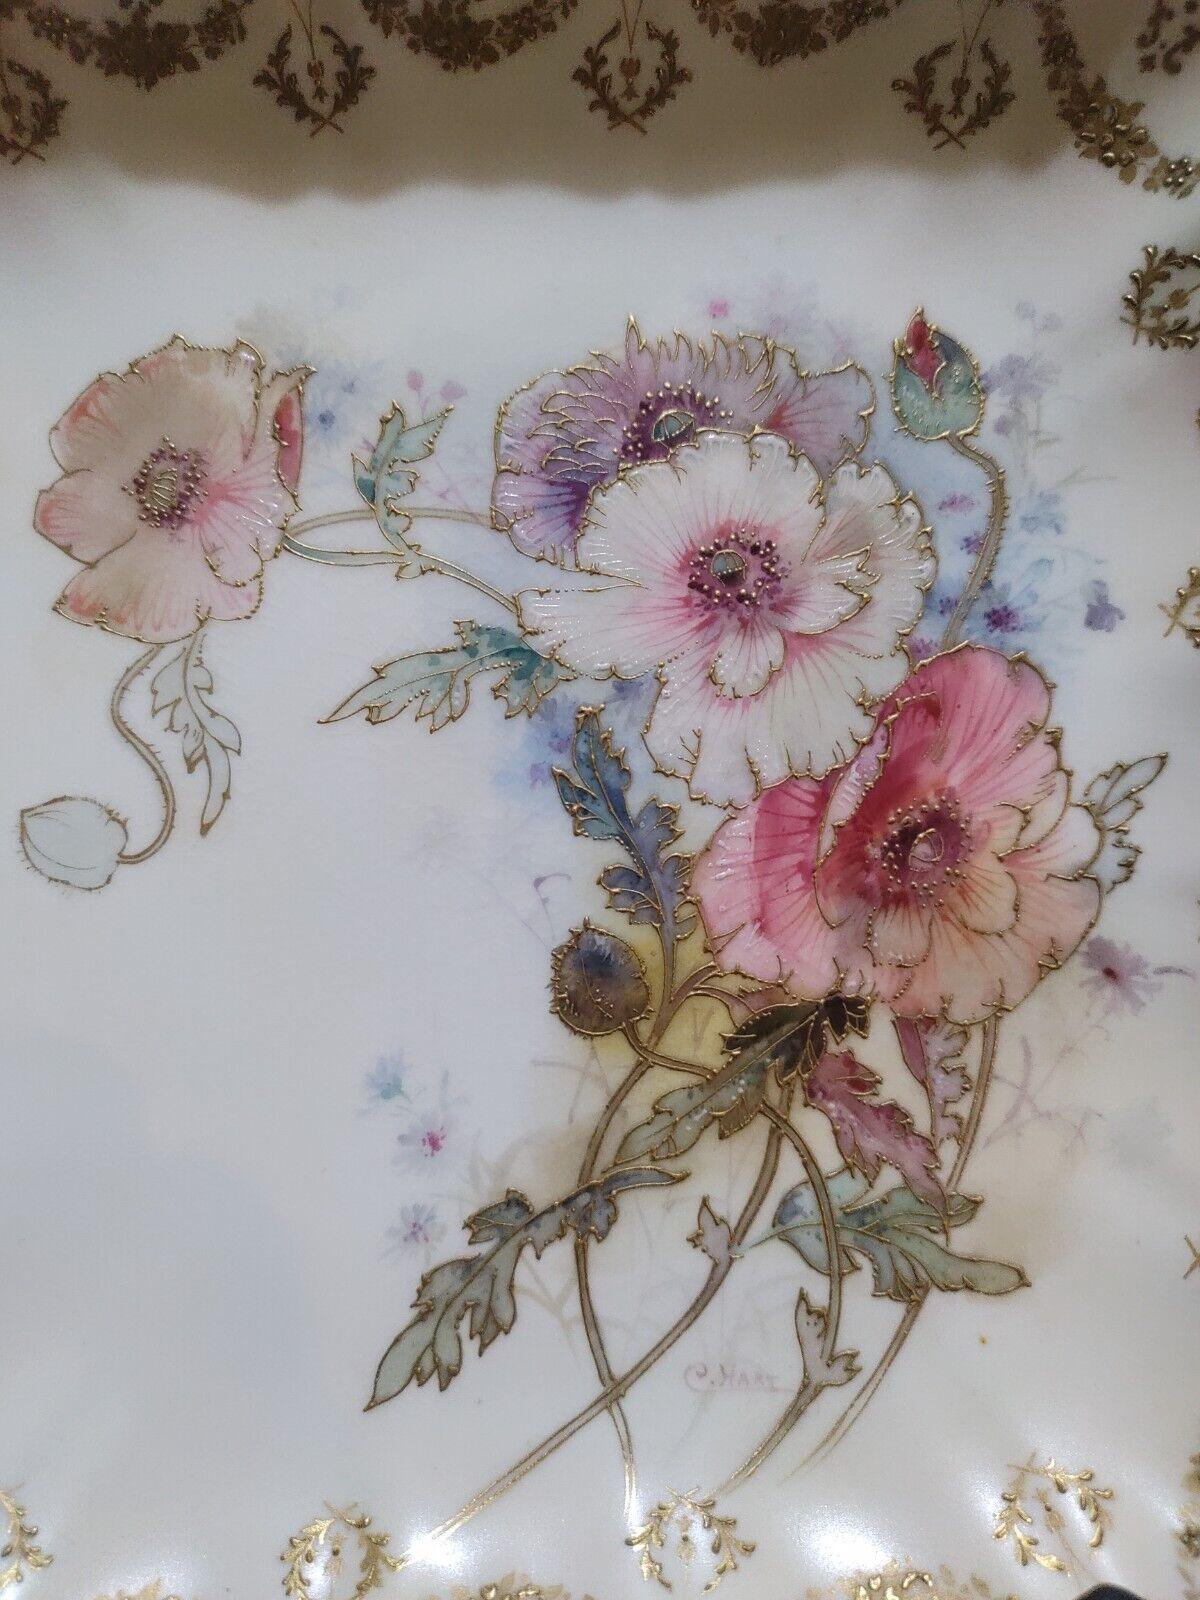 Antique Doulton Burslem Hand Painted Spanish Ware Porcelain Floral Plate Dish - Tommy's Treasure